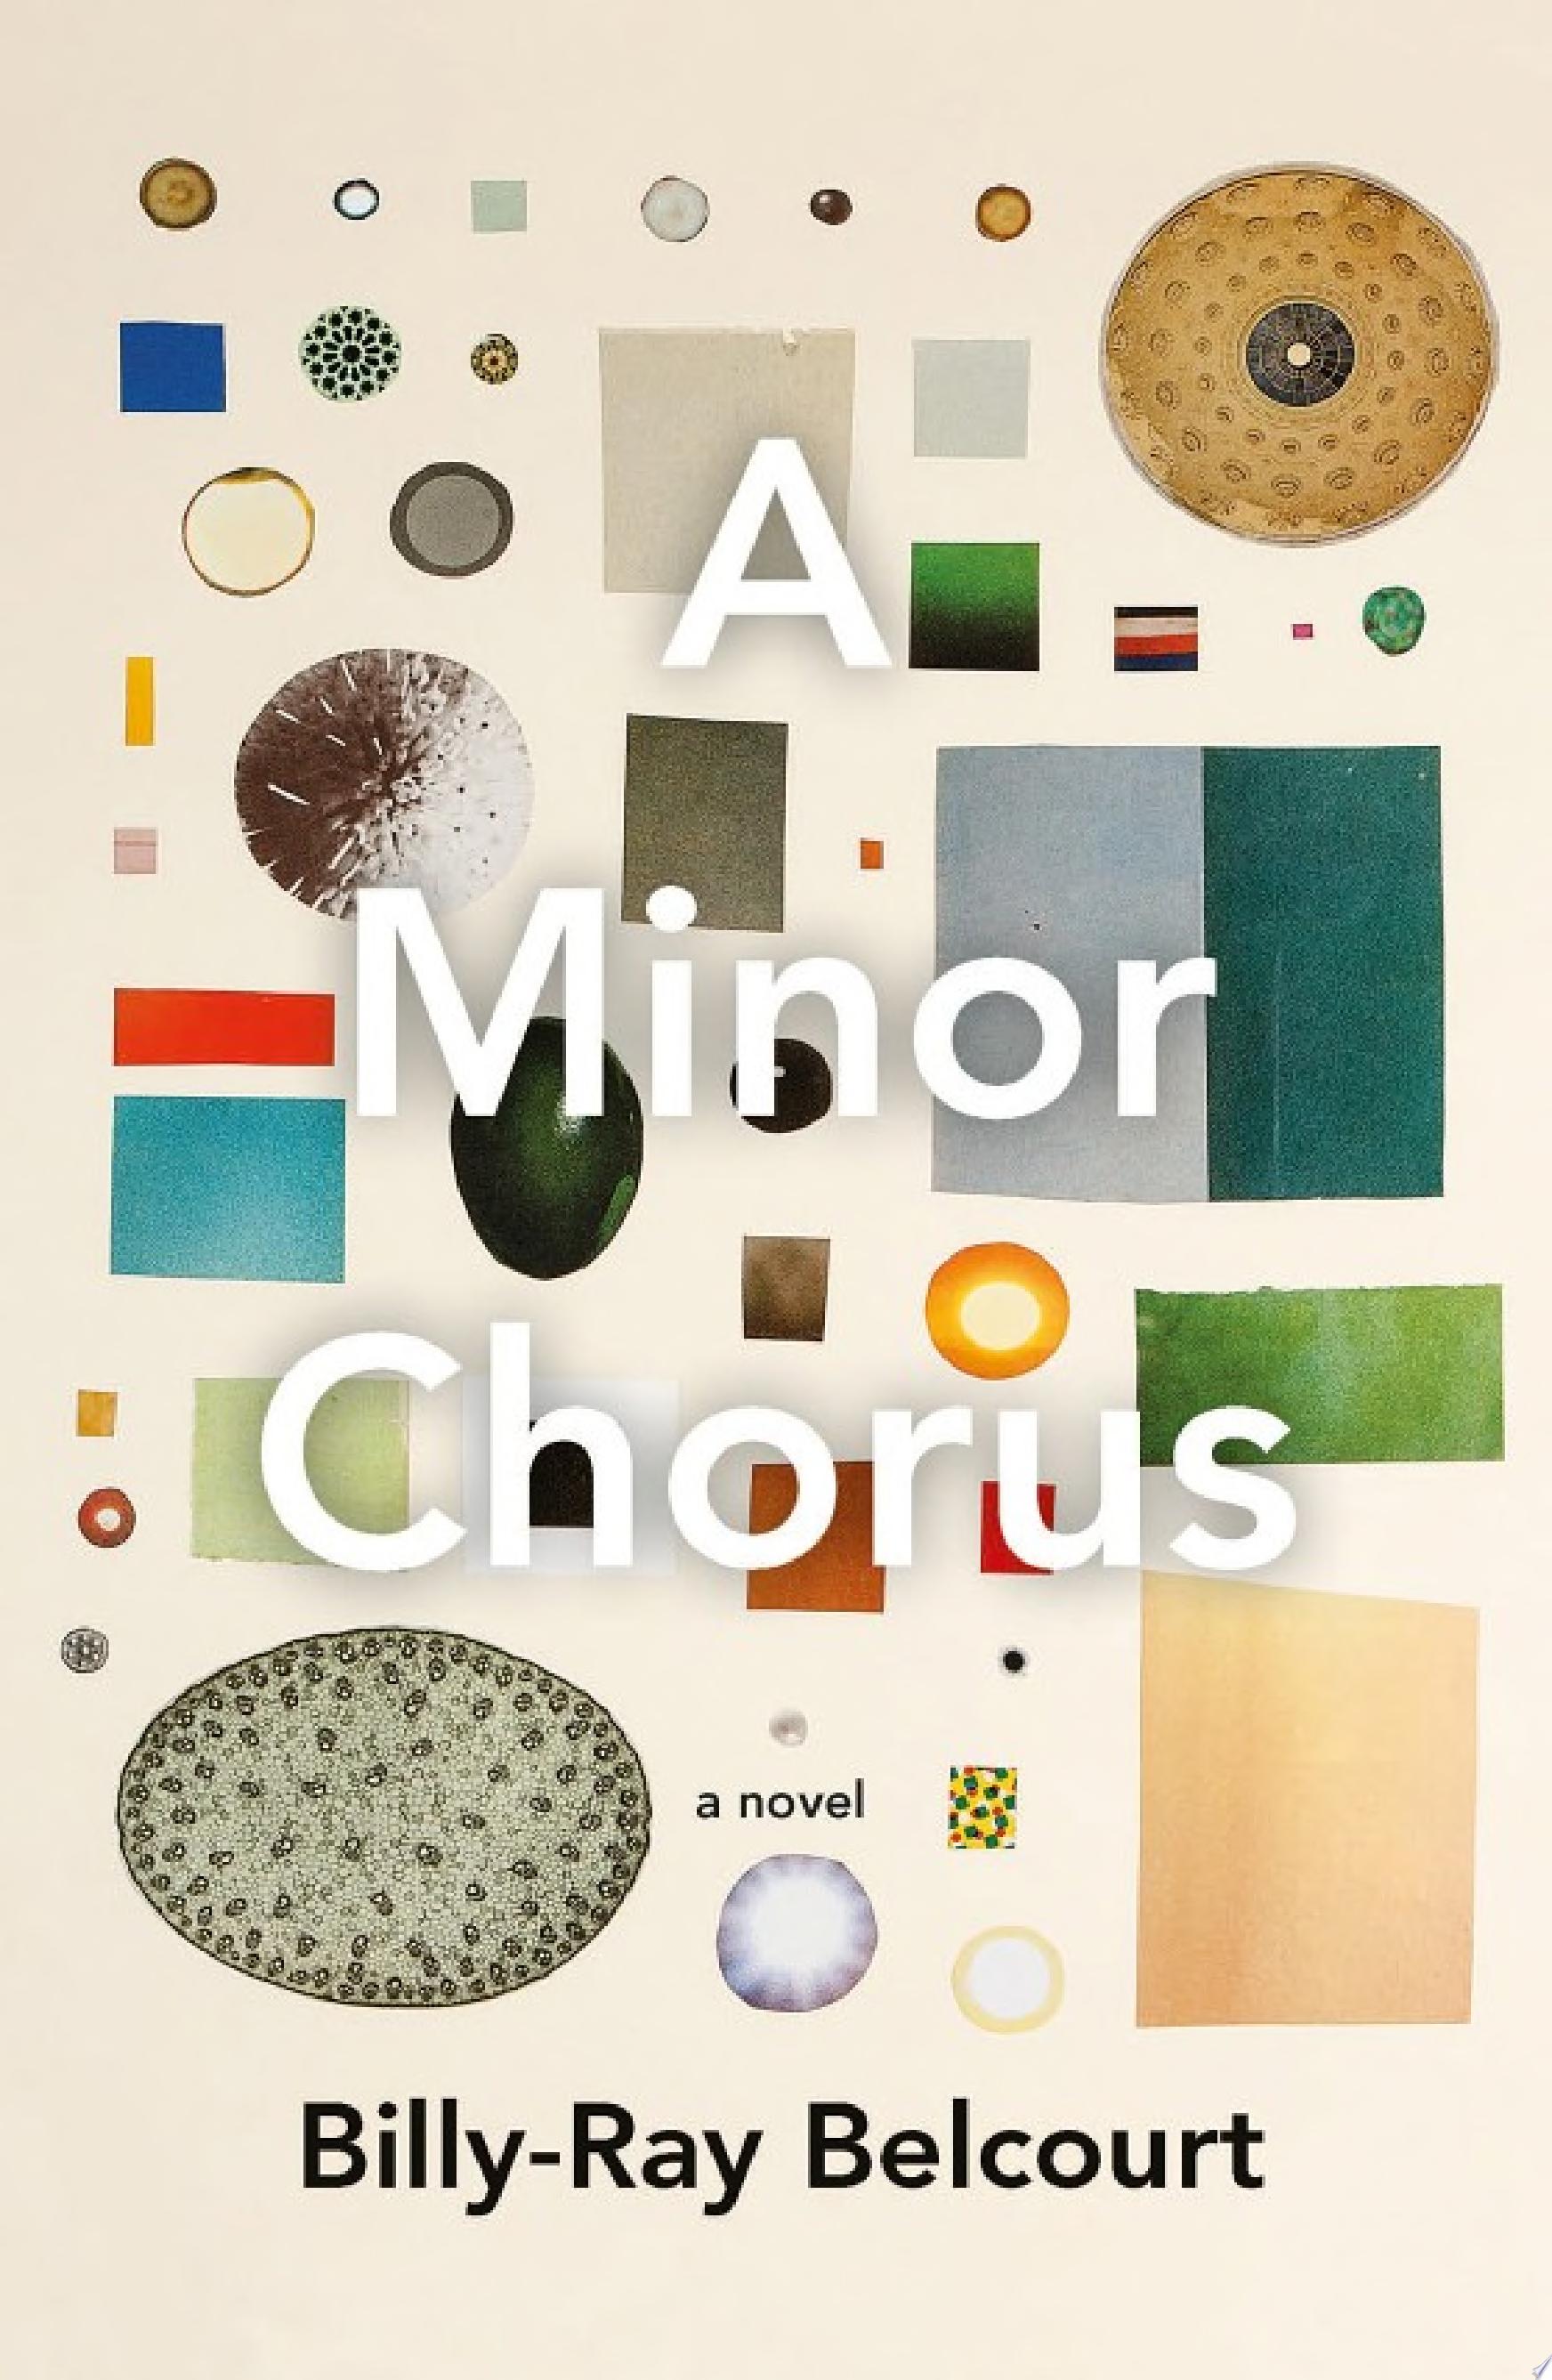 Image for "A Minor Chorus"